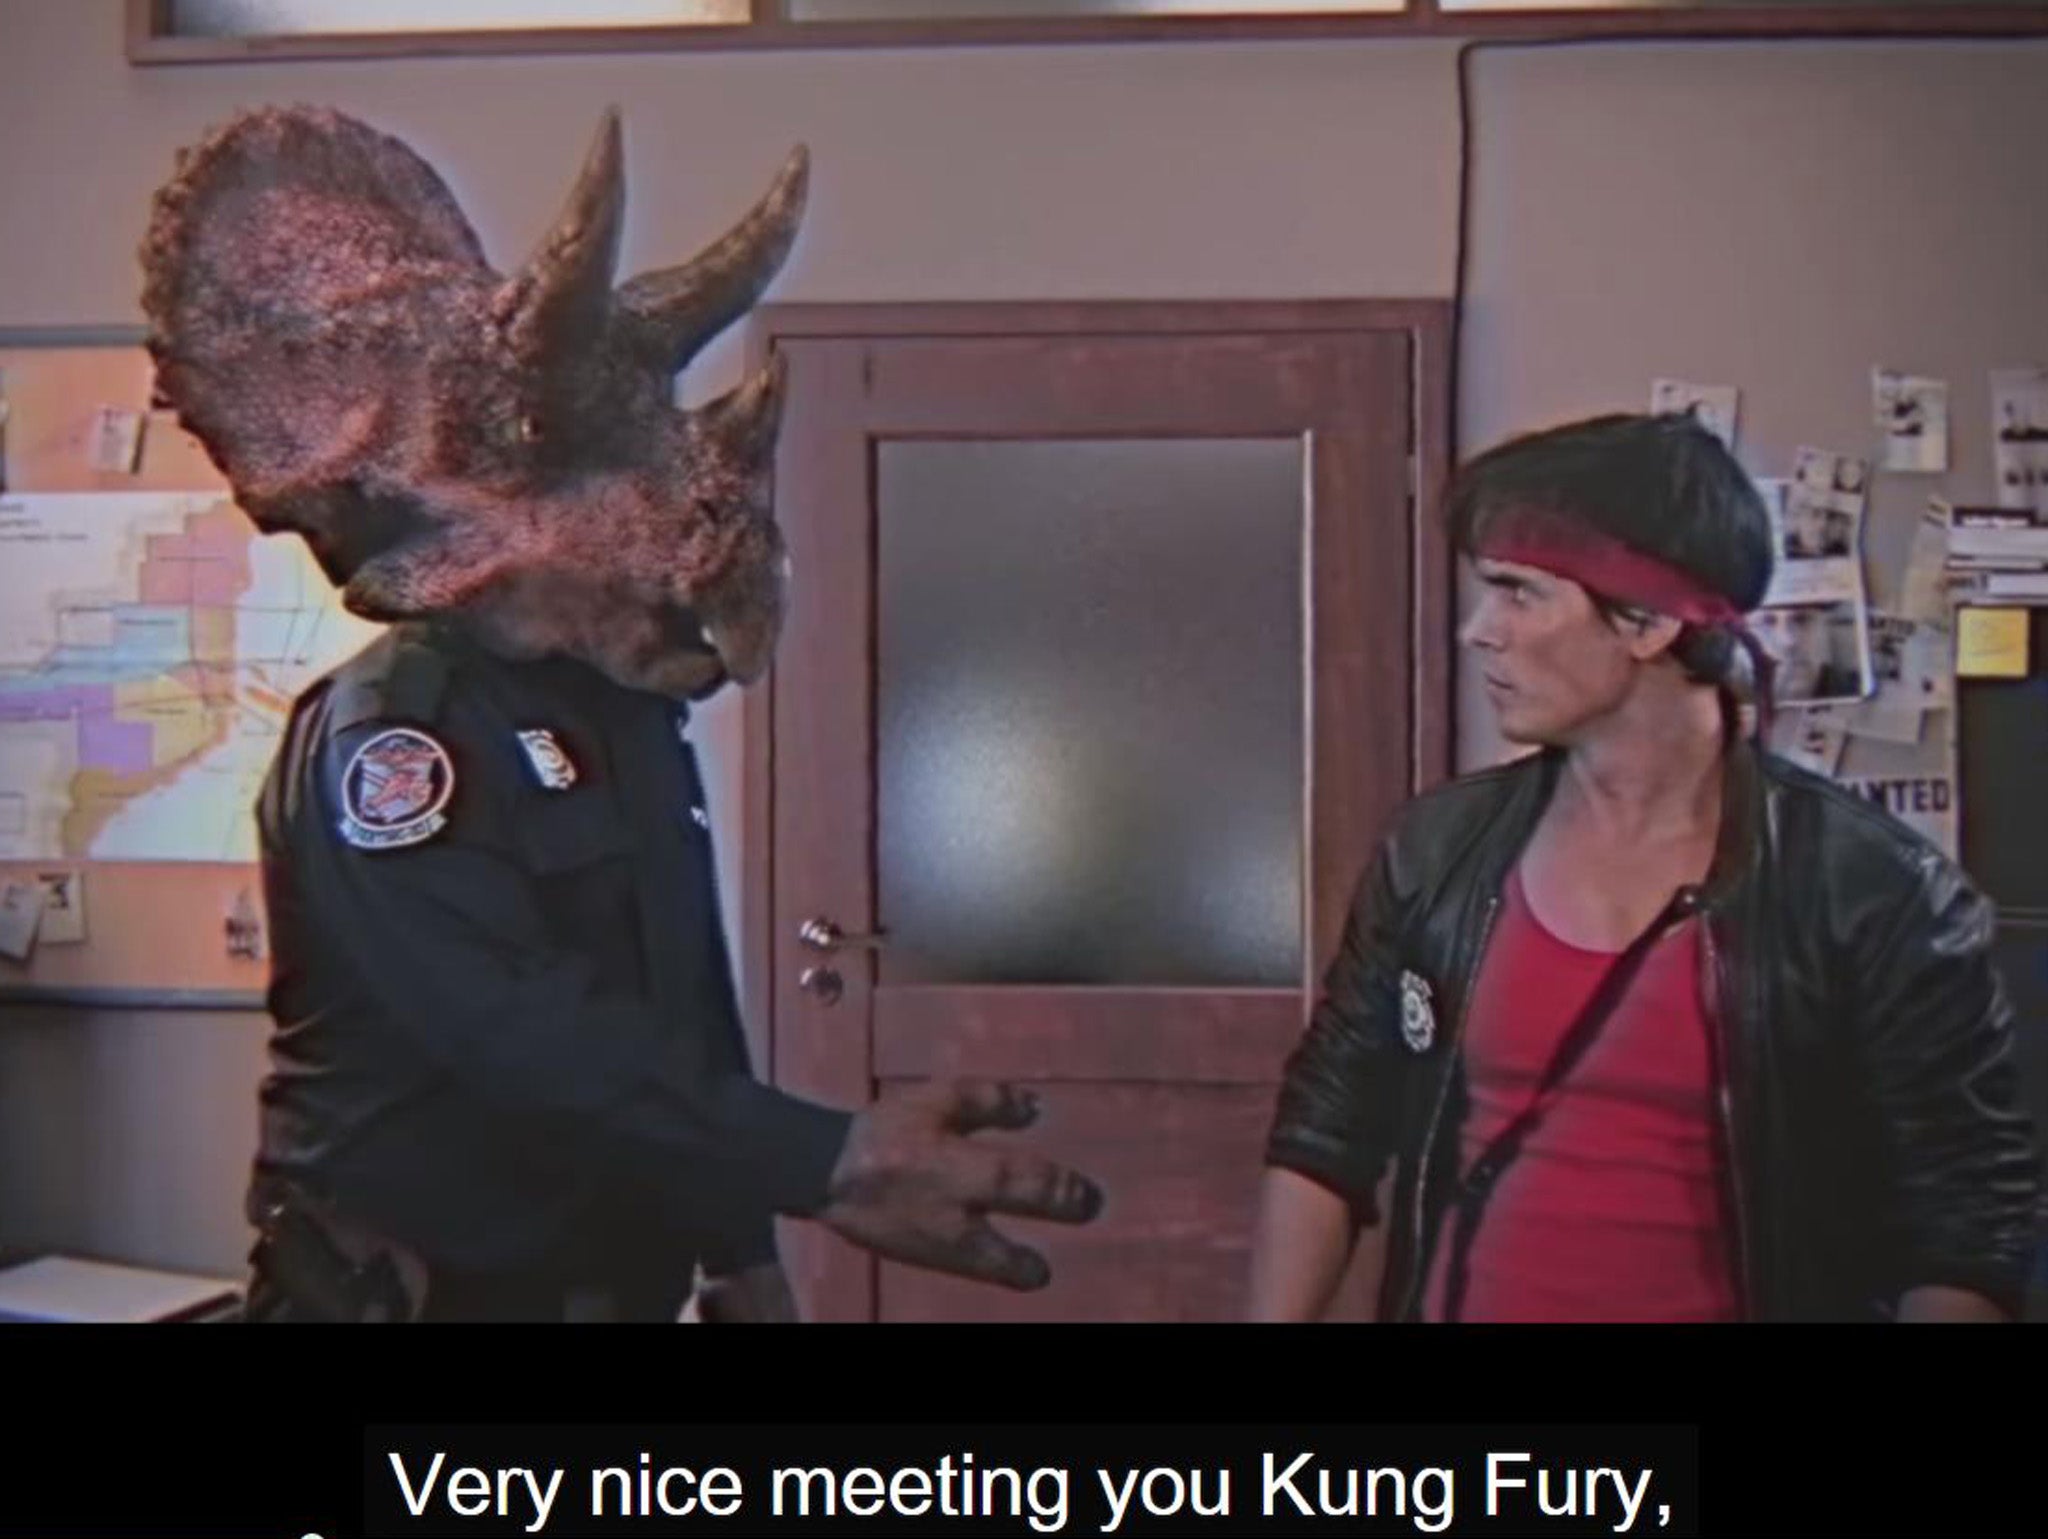 A scene from David Sandberg's wacky Eighties action film Kung Fury